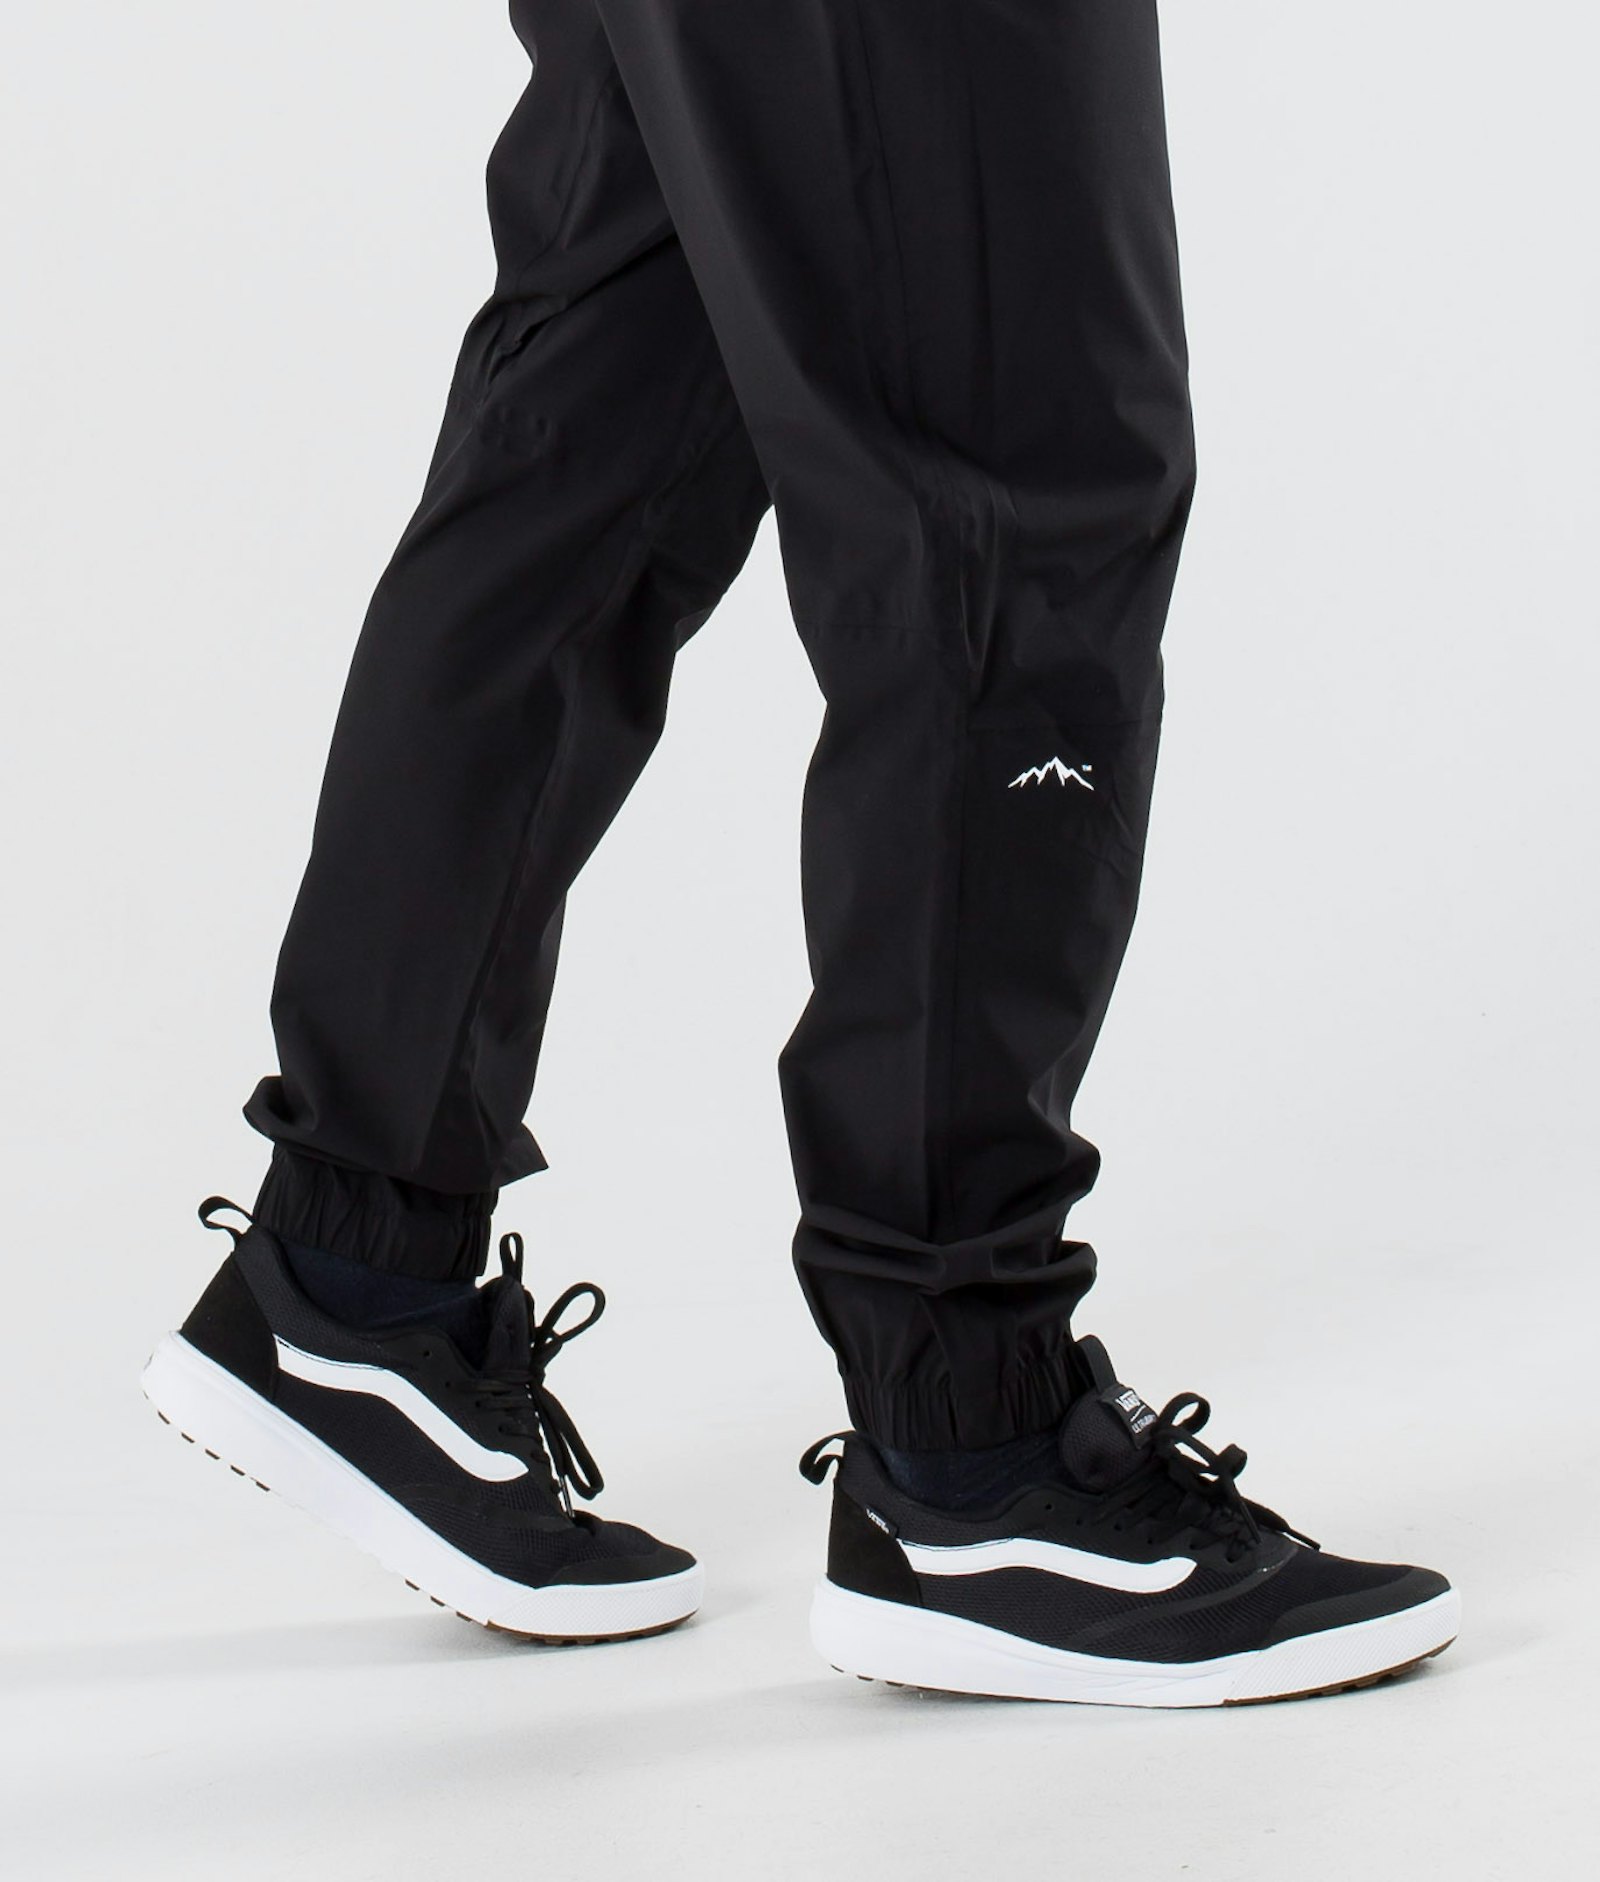 Dope Drizzard 2020 Pantalones Impermeables Hombre Black